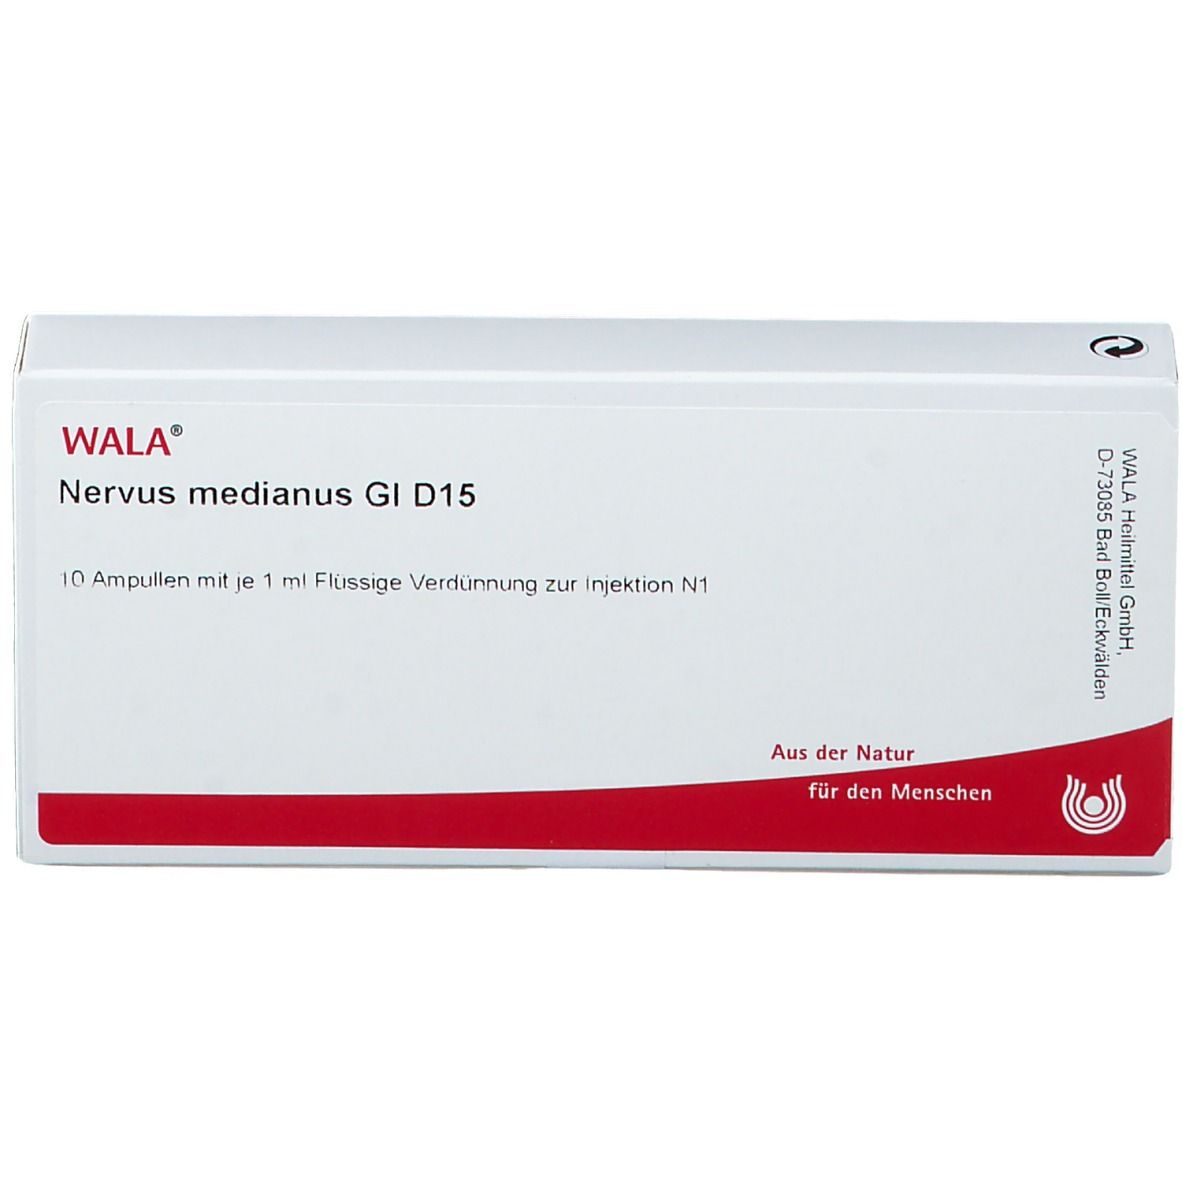 WALA® Nervus medianus Gl D 15